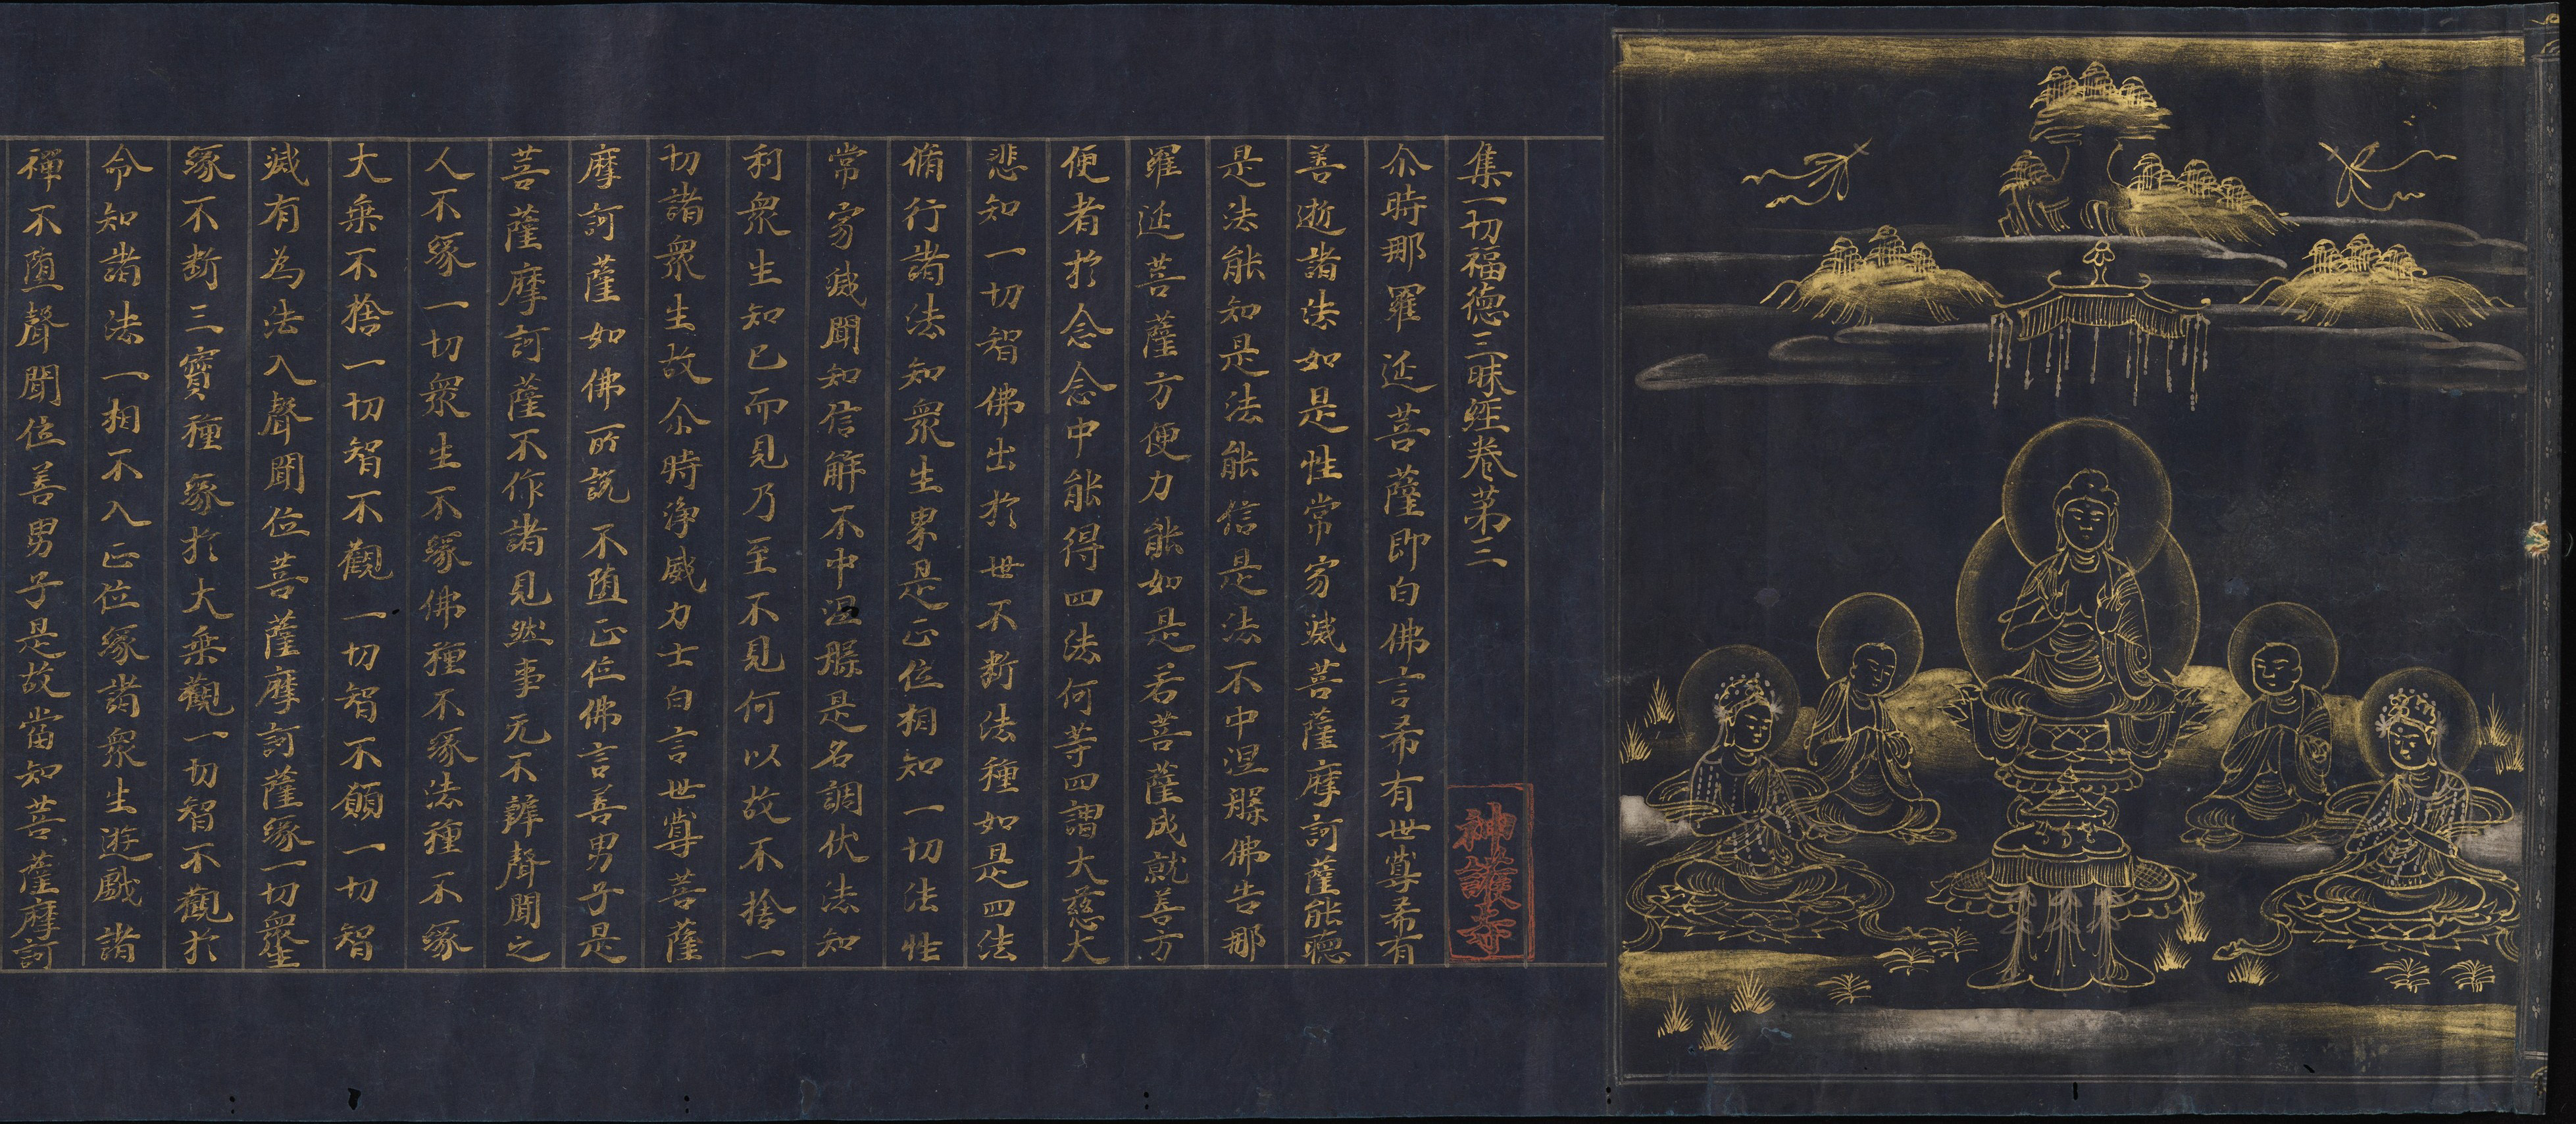 Copertina del Sutra della vita eterna (Wu Liang Shou Jing) 1837 (vernice  dorata su carta blu)